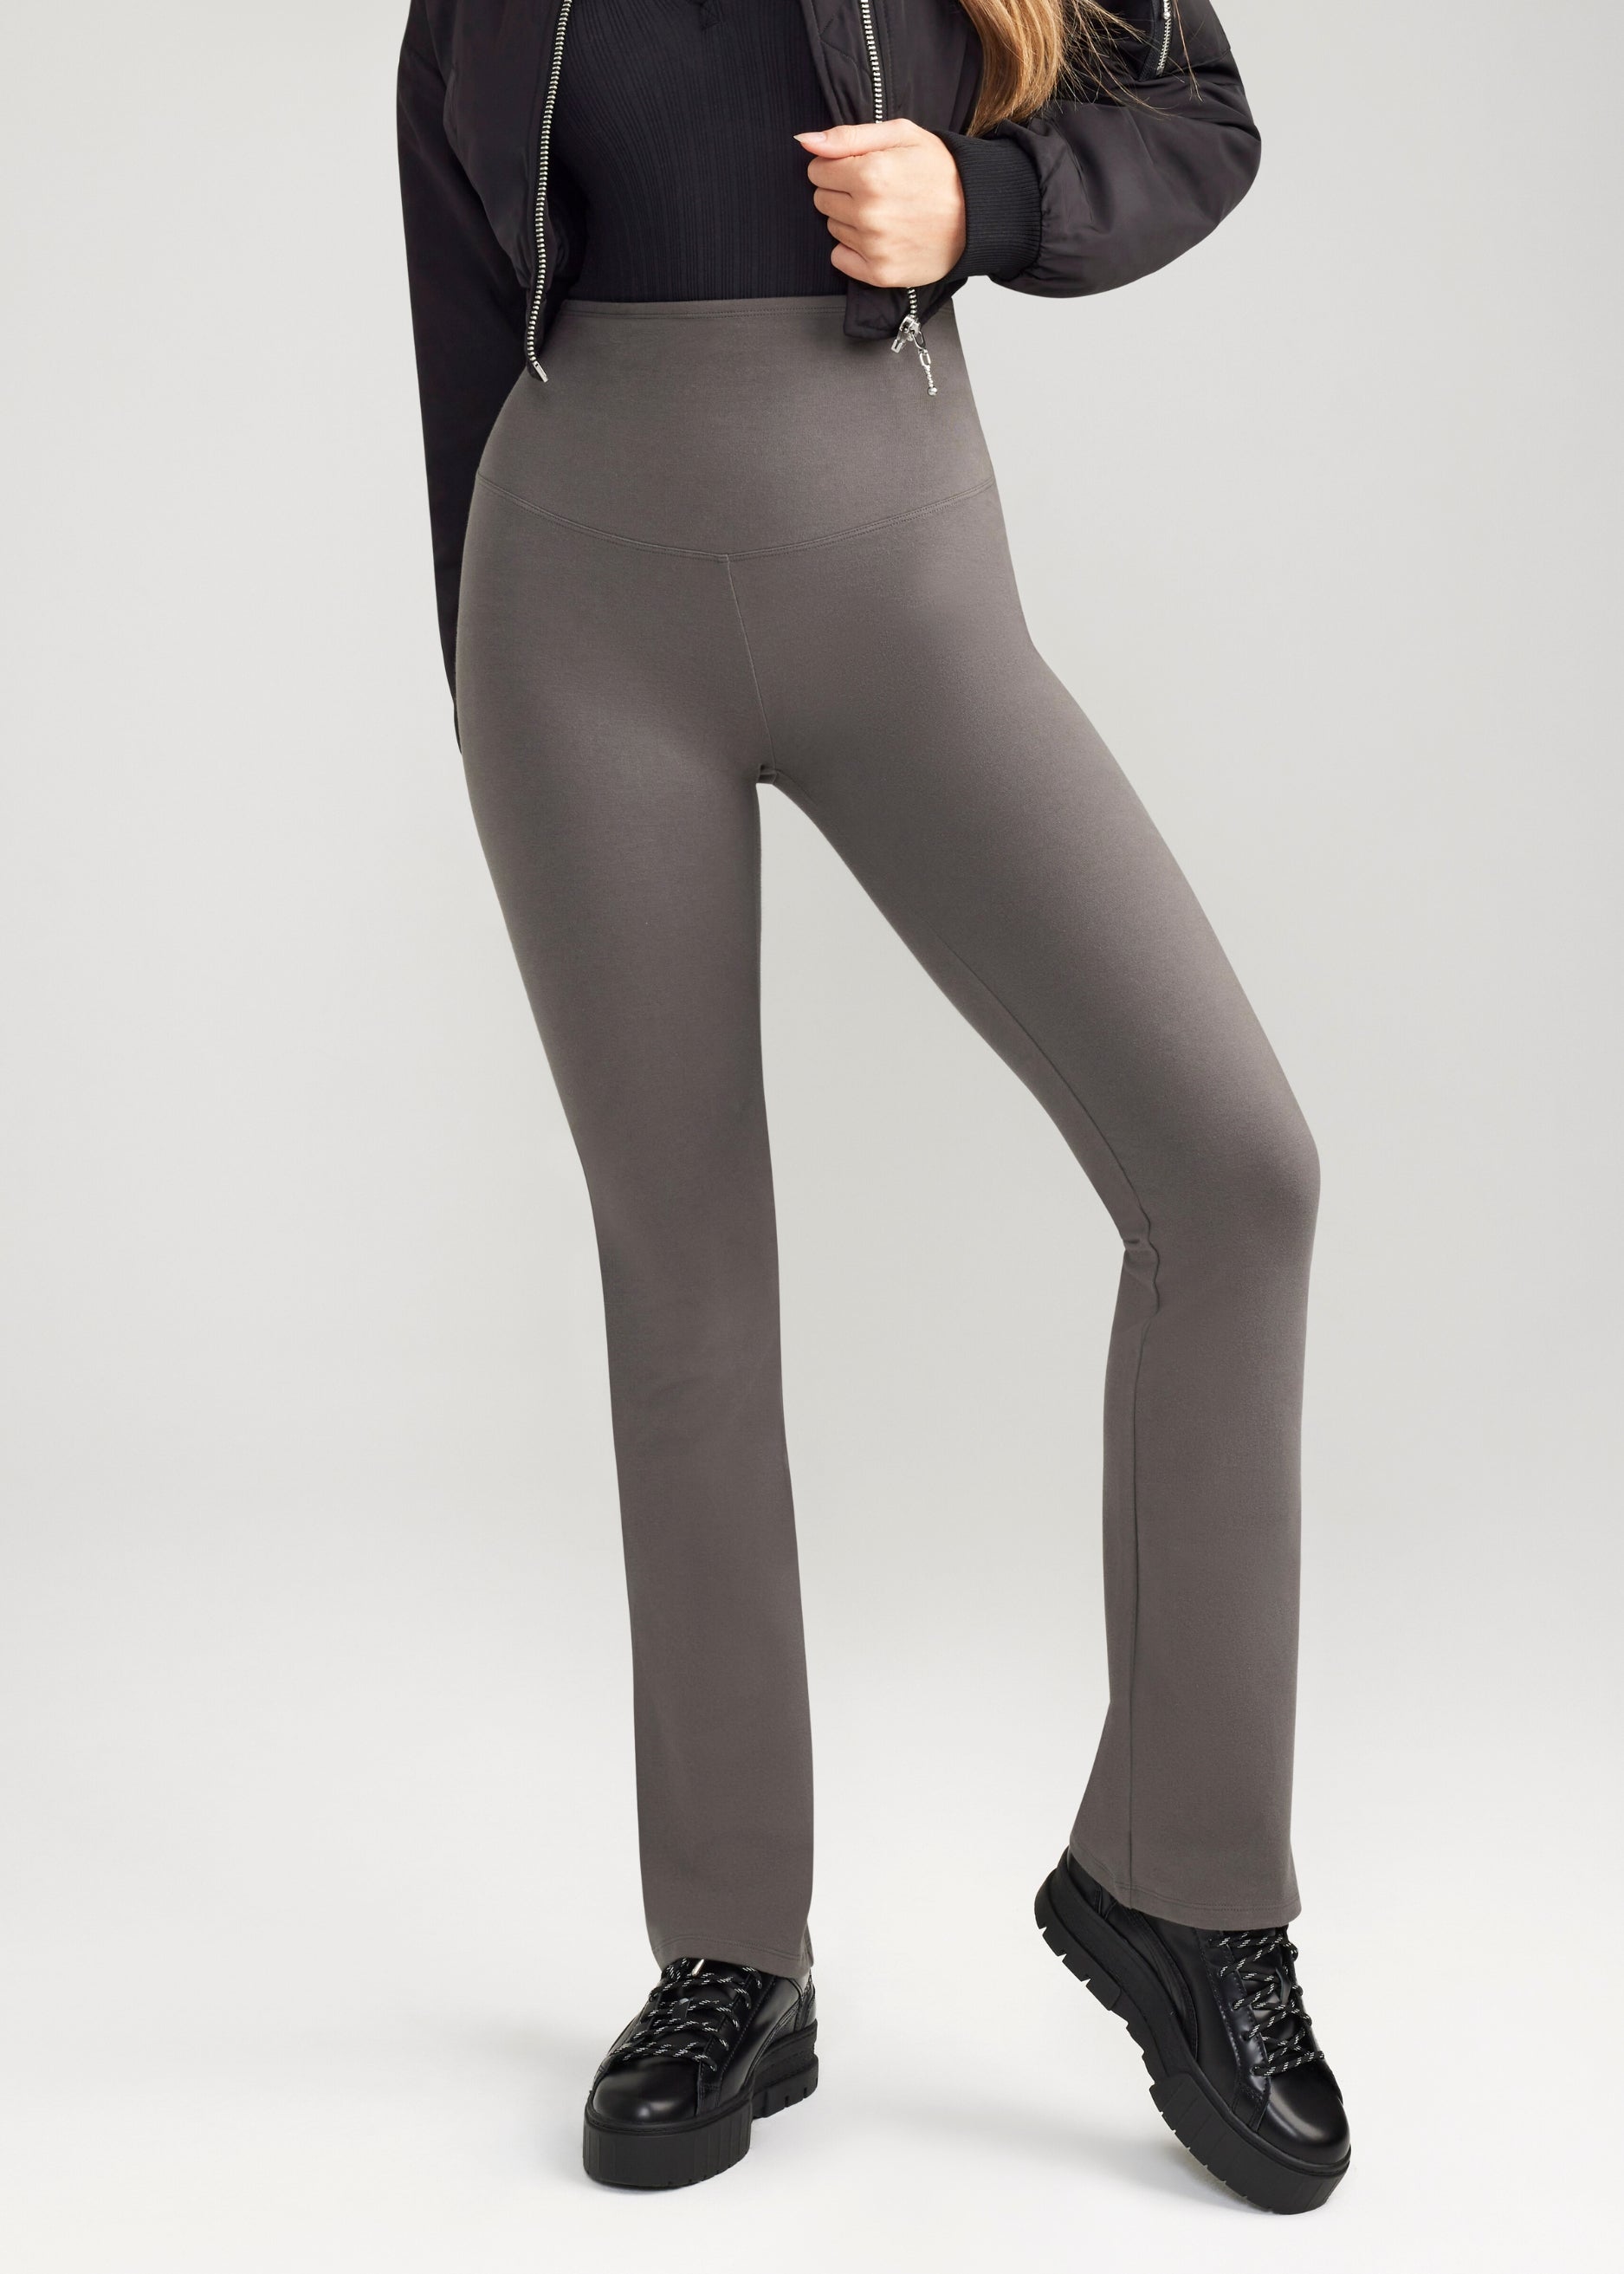 Betabrand Women's Classic Dress Yoga Pants Size Medium Black White Striped  M